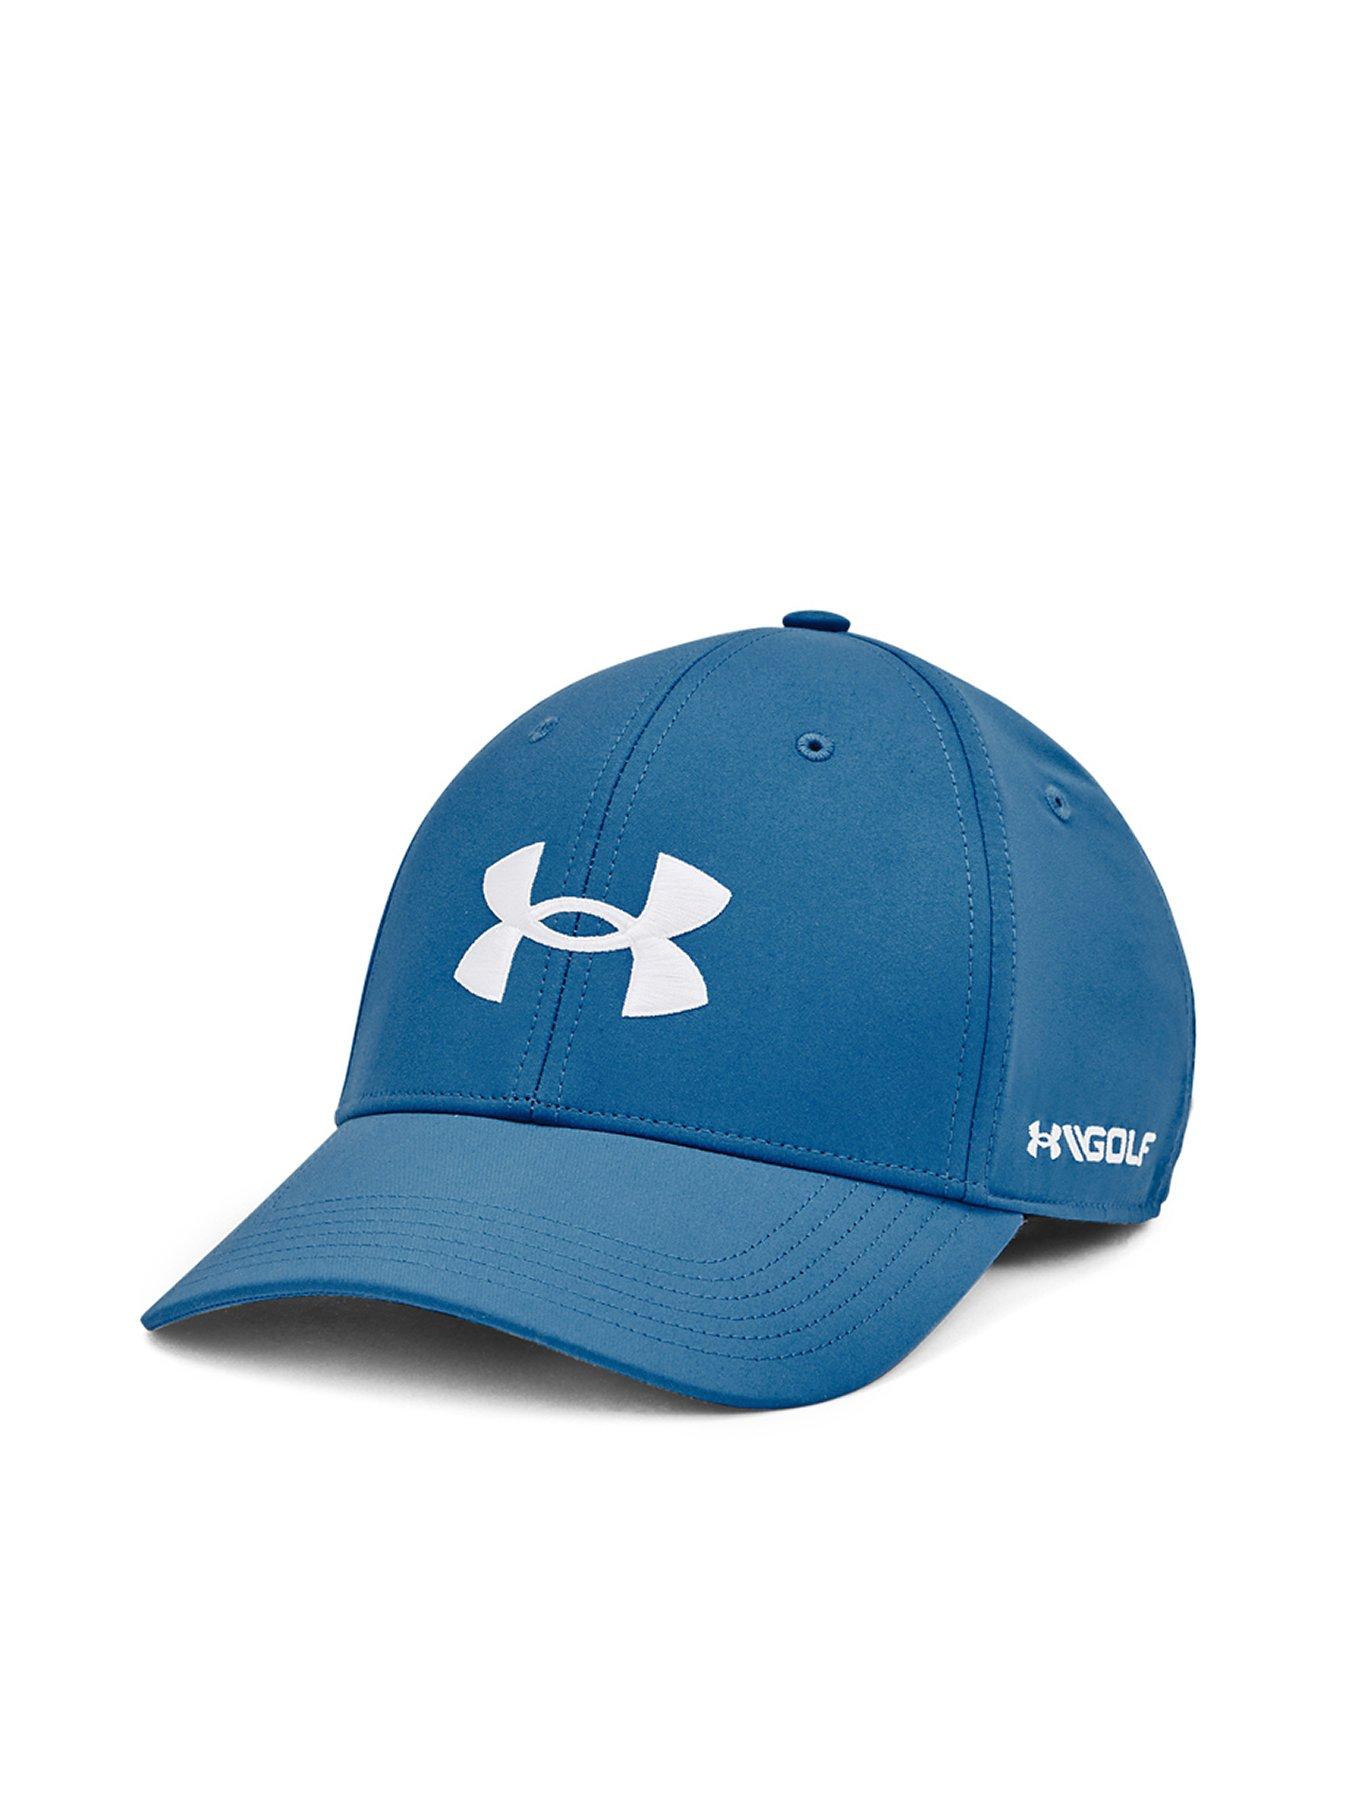 UNDER ARMOUR Mens Golf 96 Hat - Blue